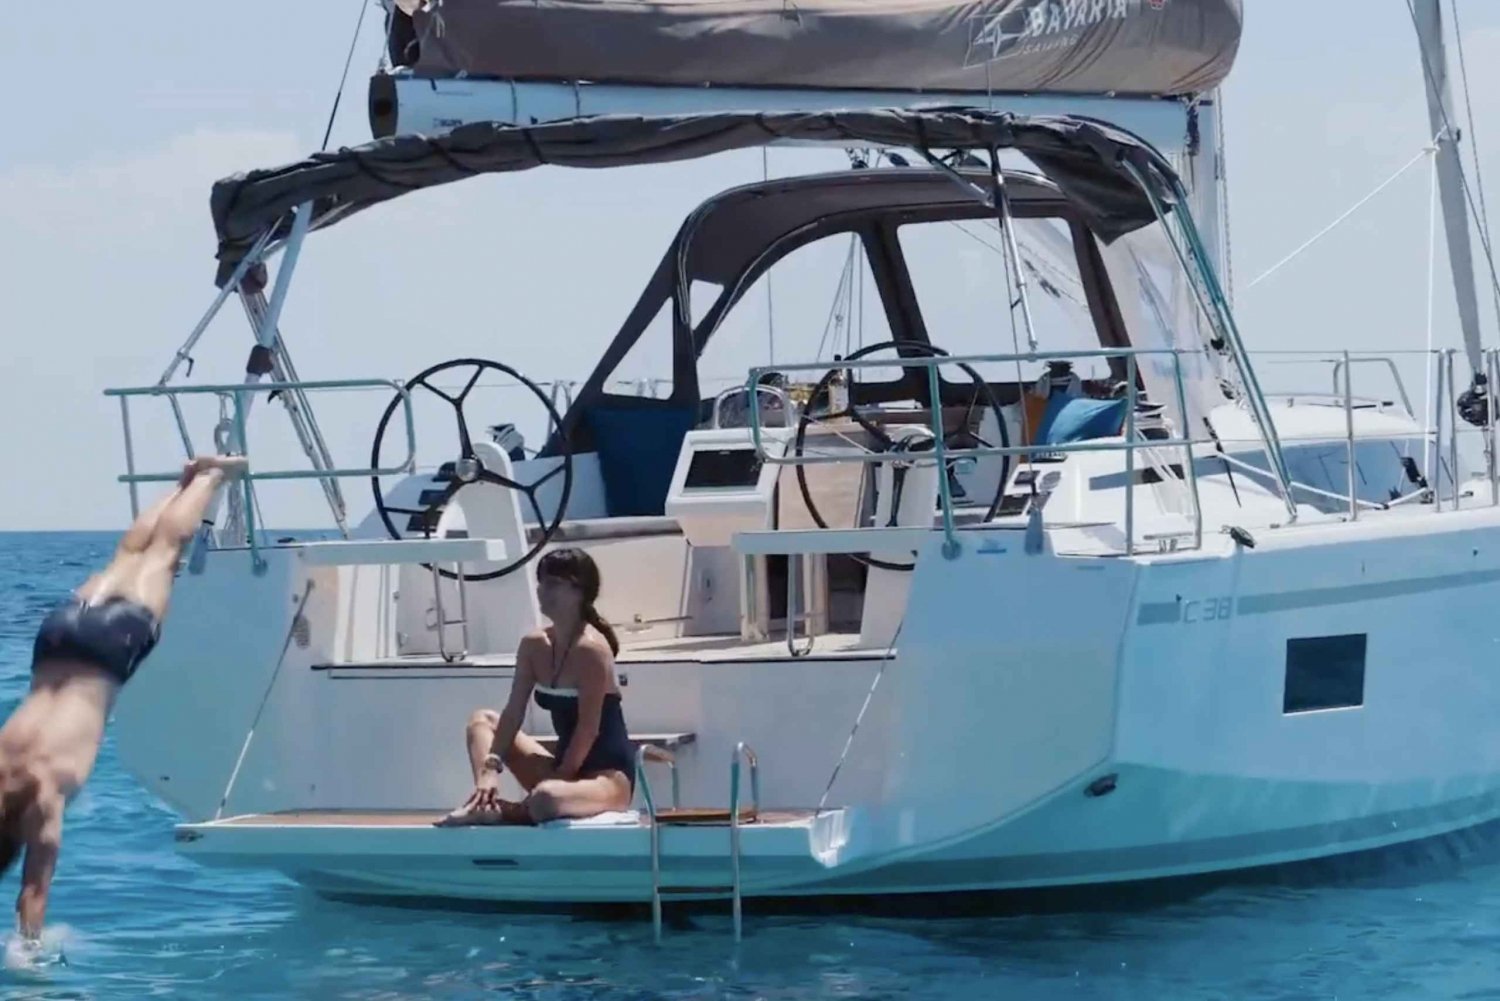 Portimao: Half Day Luxury Sail-Yacht Cruise